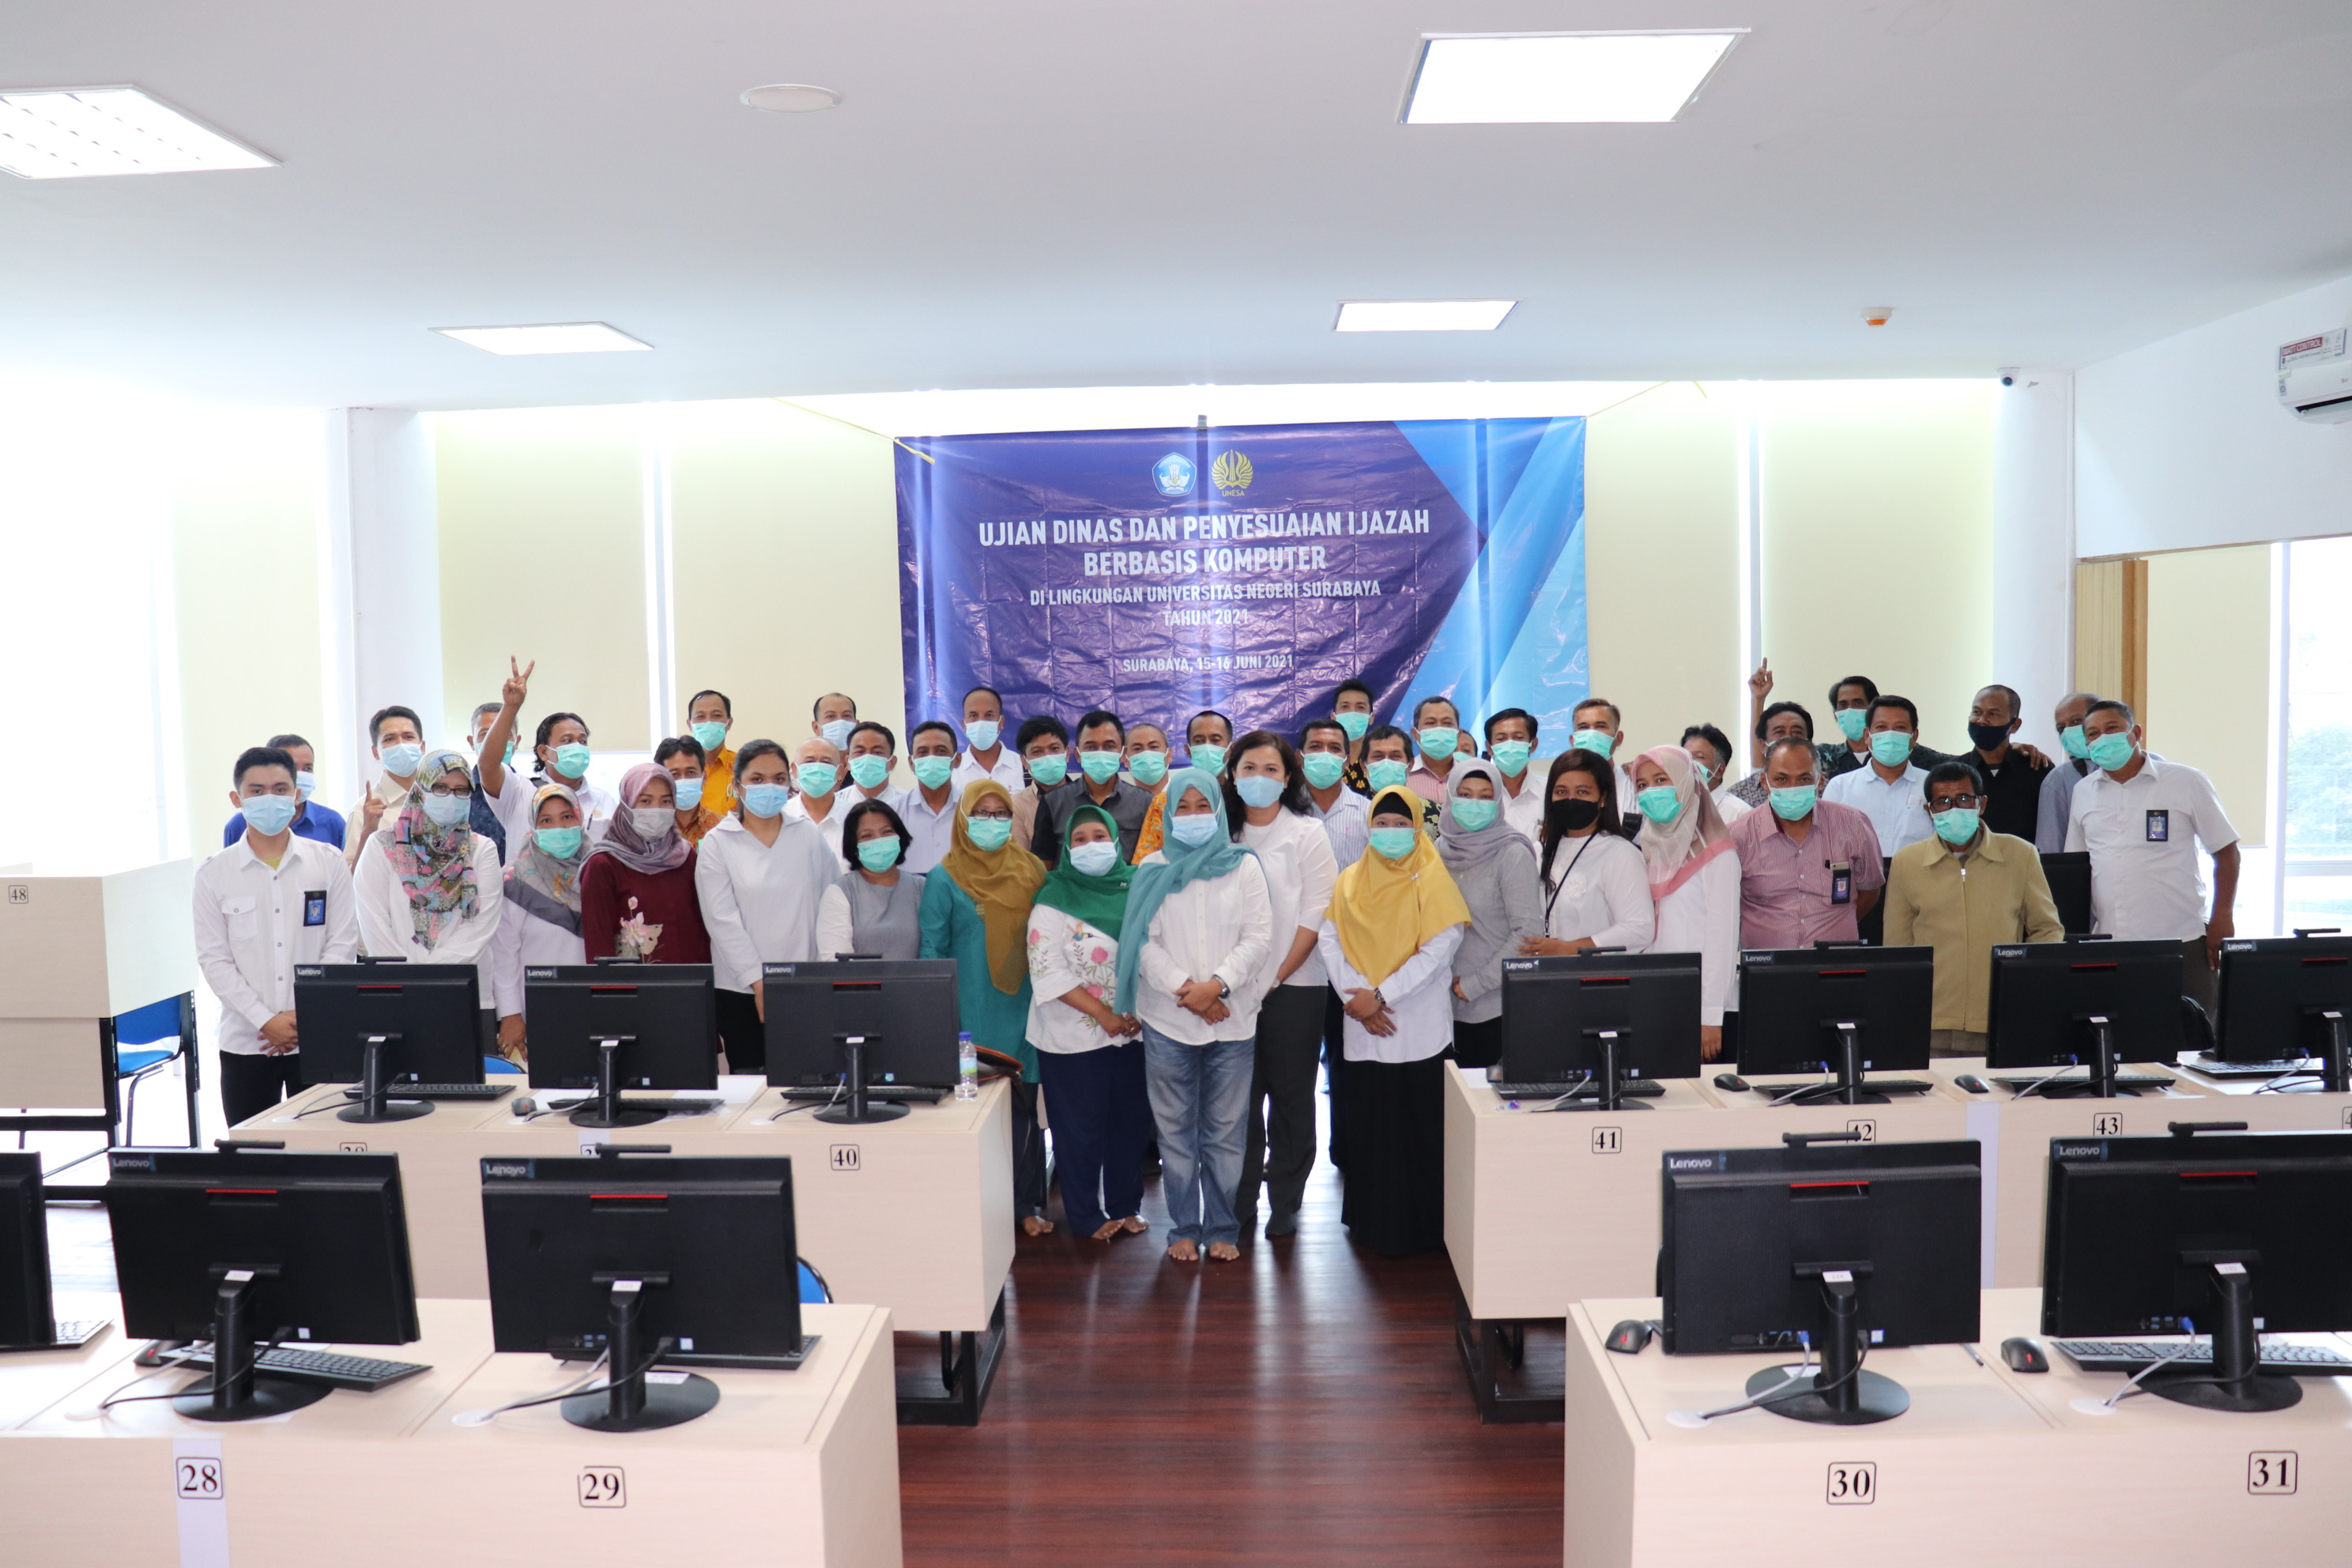 Ujian Dinas Berbasis Komputer di Lingkungan Universitas Negeri Surabaya Tahun 2021